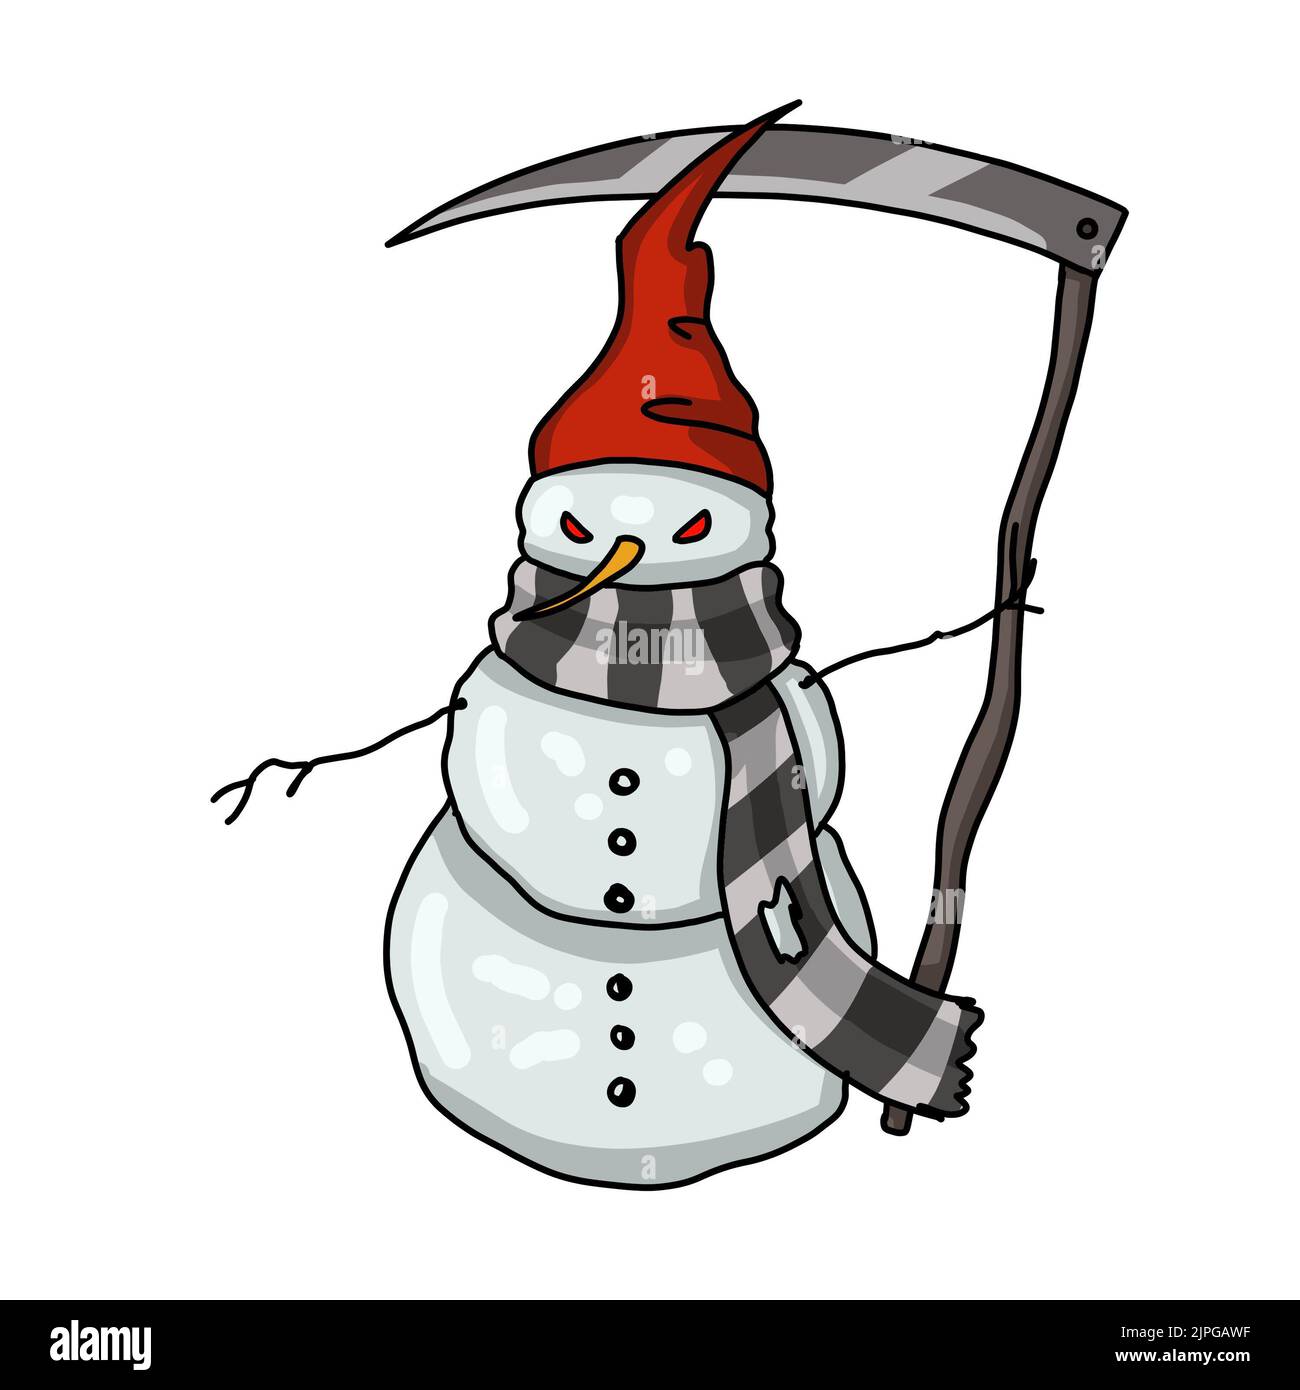 Creepmas. It's a terrible Christmas. Gothic. scary snowman with a scythe Stock Photo